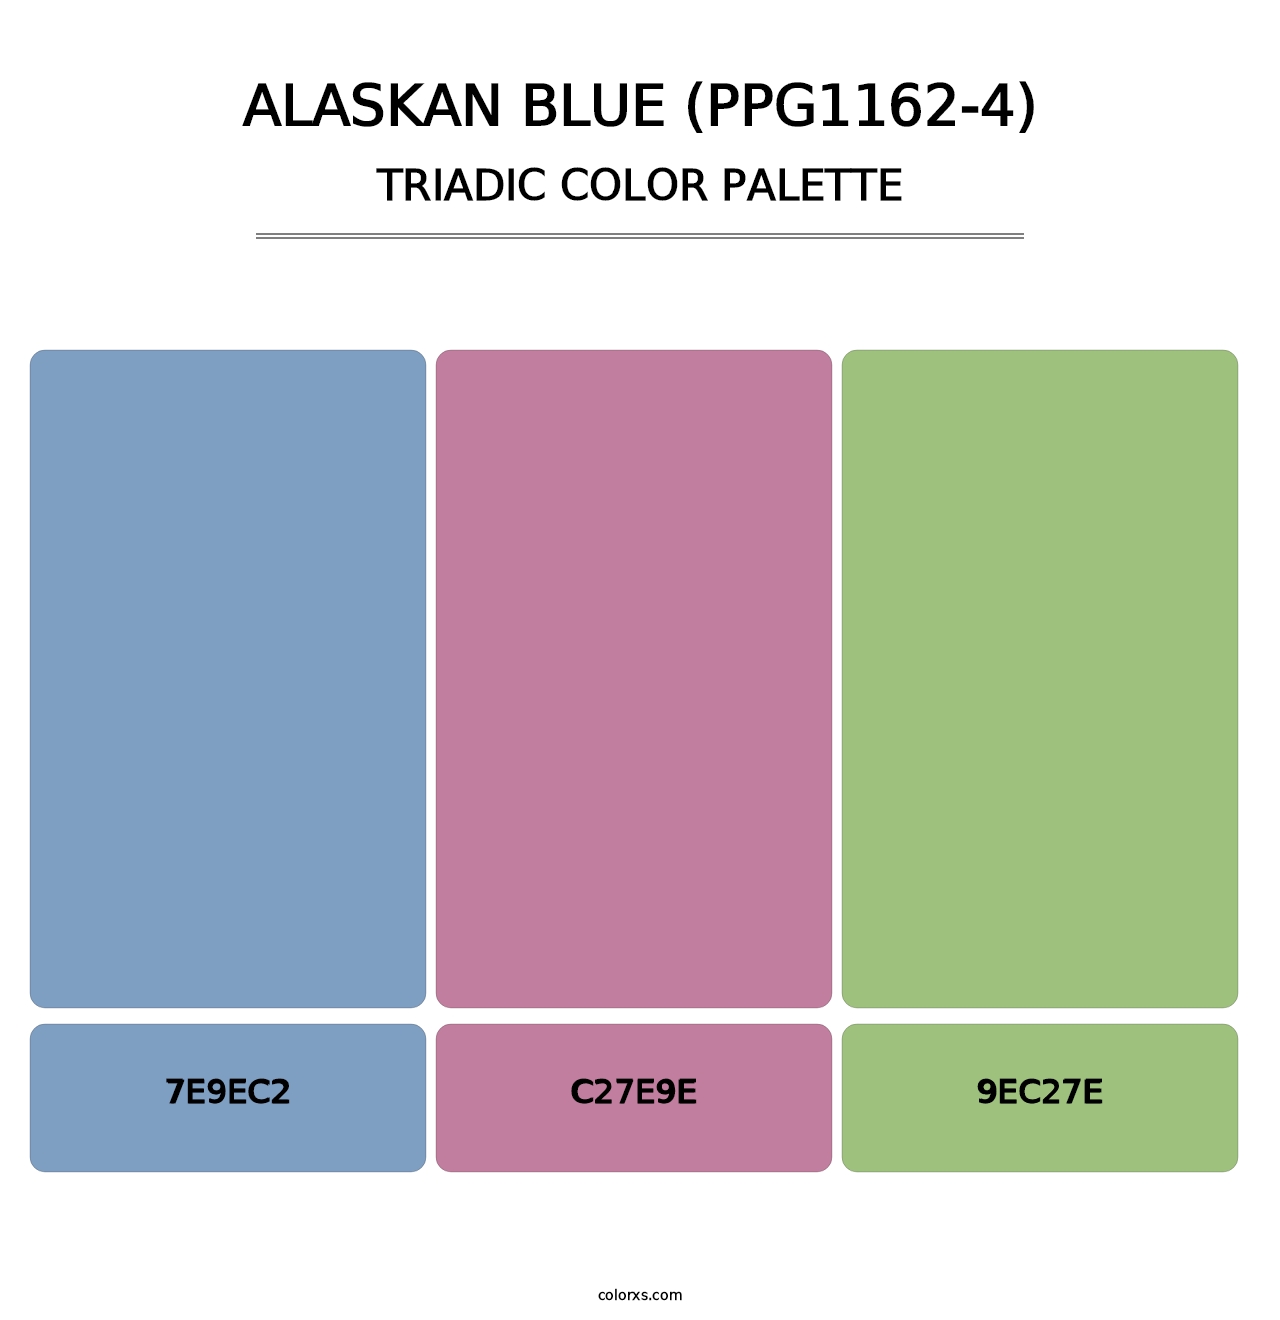 Alaskan Blue (PPG1162-4) - Triadic Color Palette